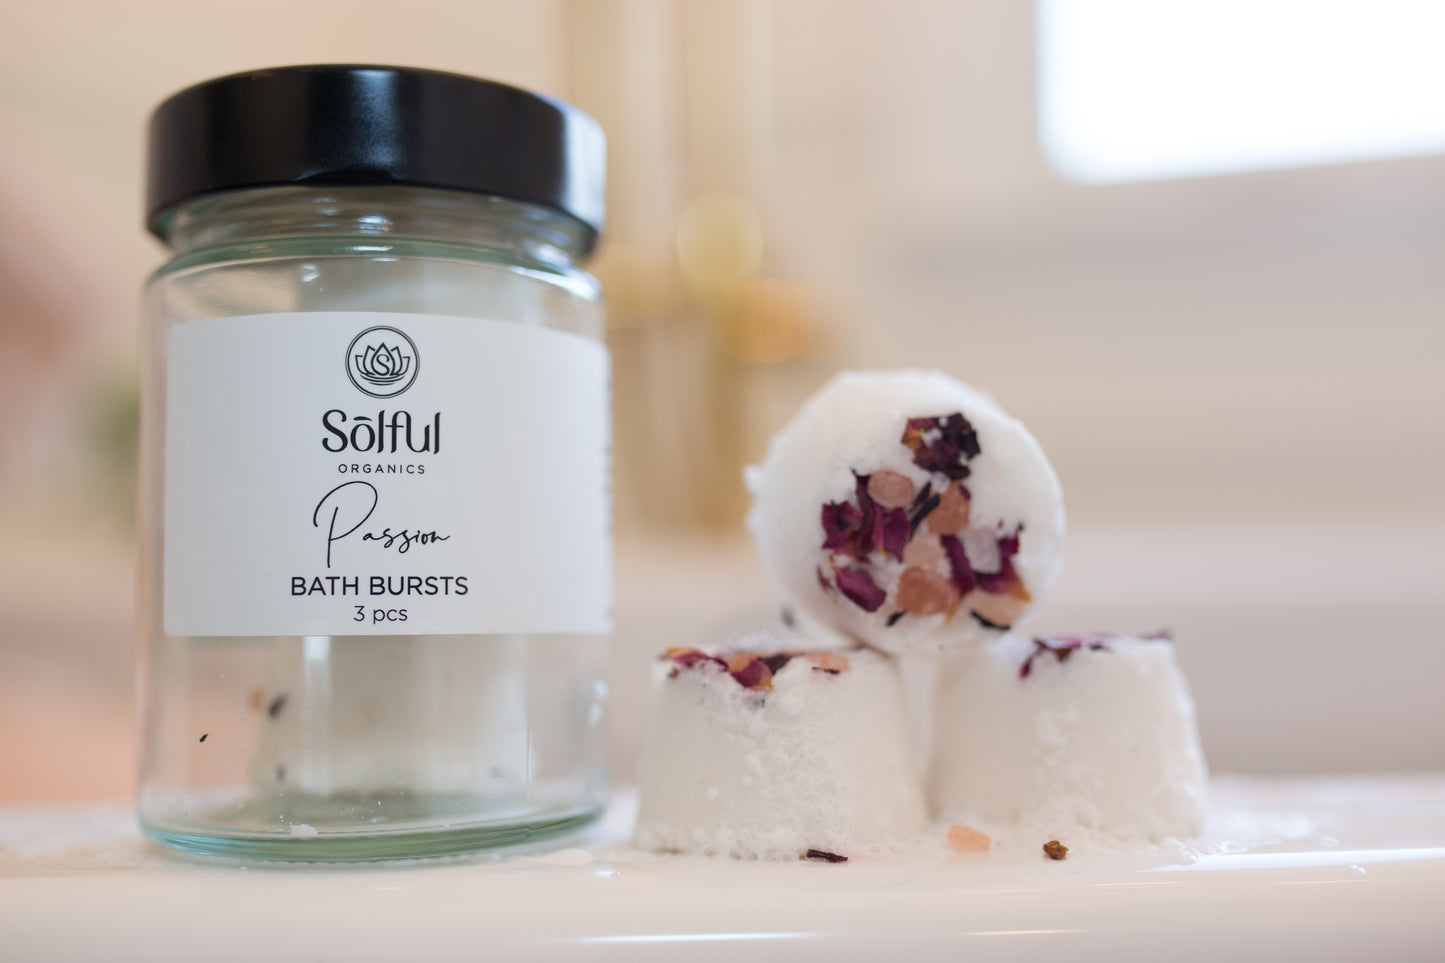 Passion Bath Bursts